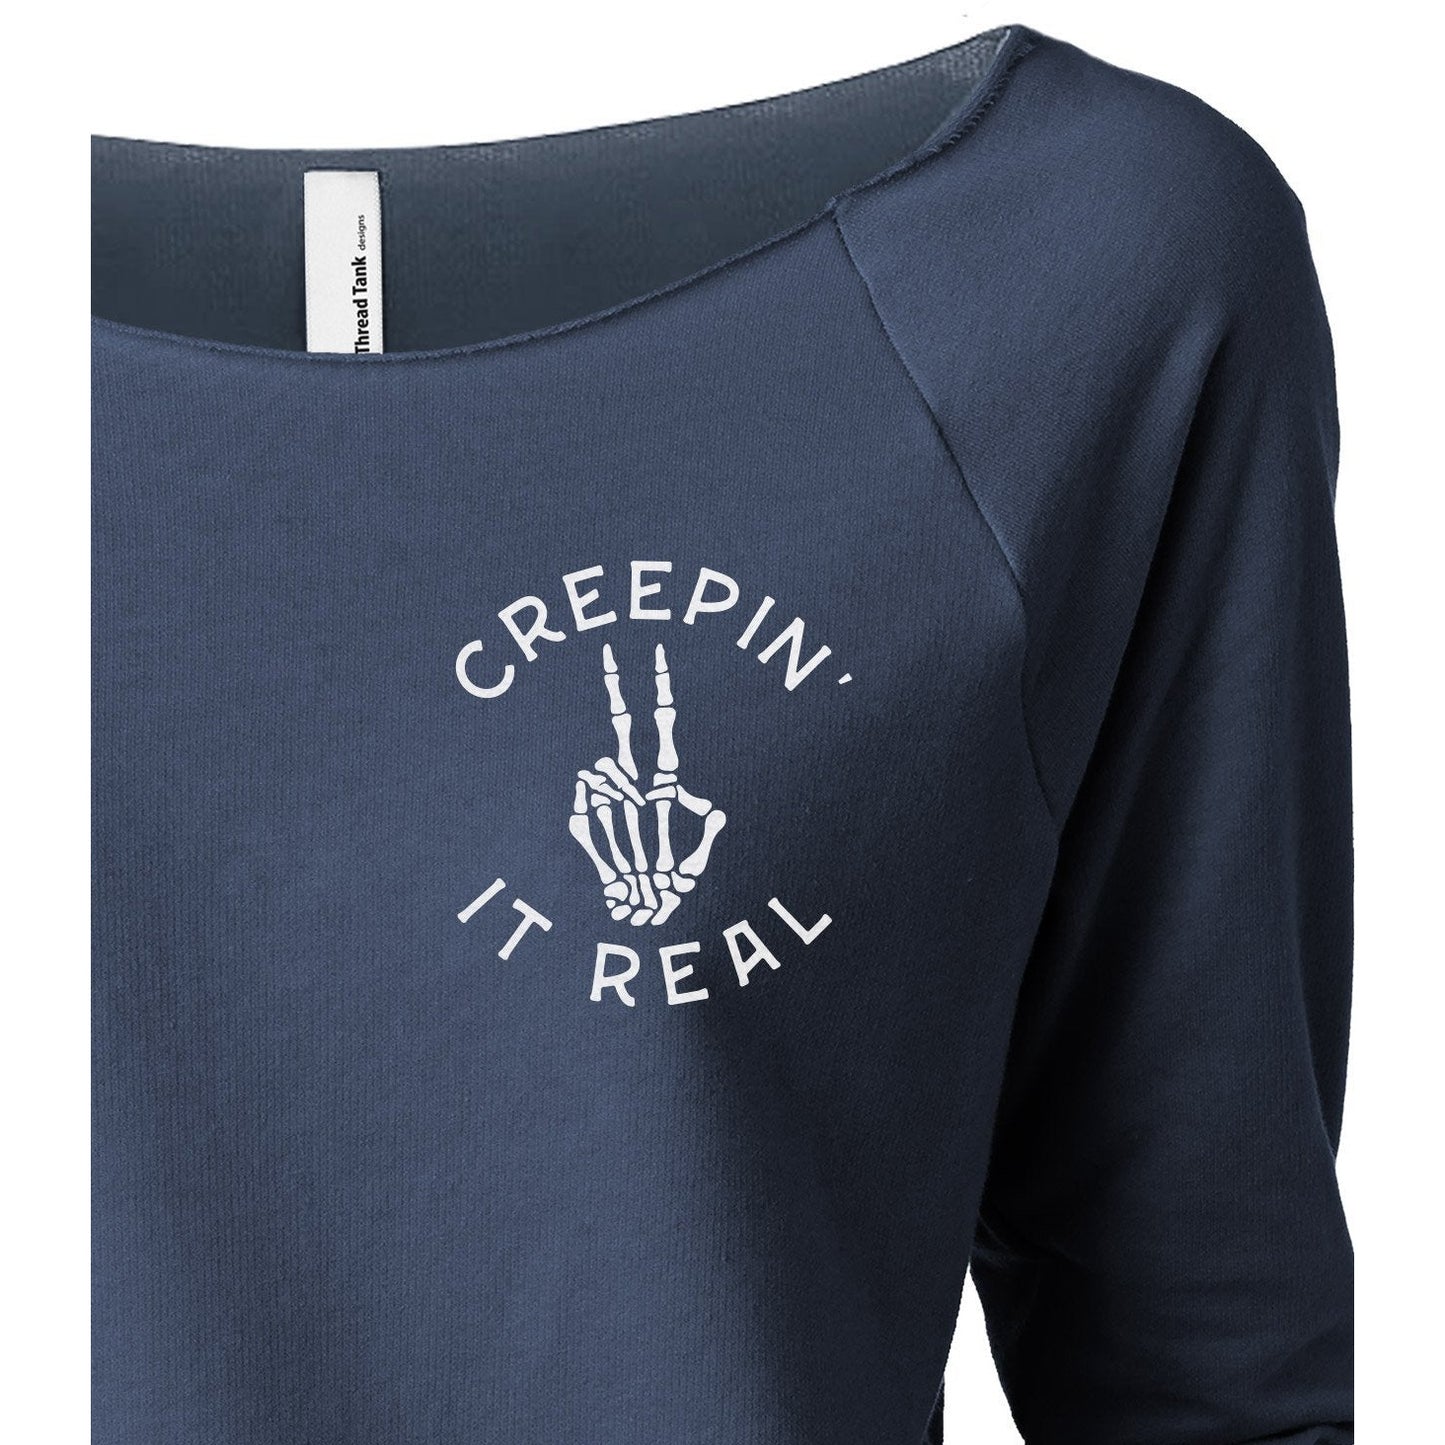 Creepin It Real Women's Graphic Printed Lightweight Slouchy 3/4 Sleeves Sweatshirt Navy Closeup